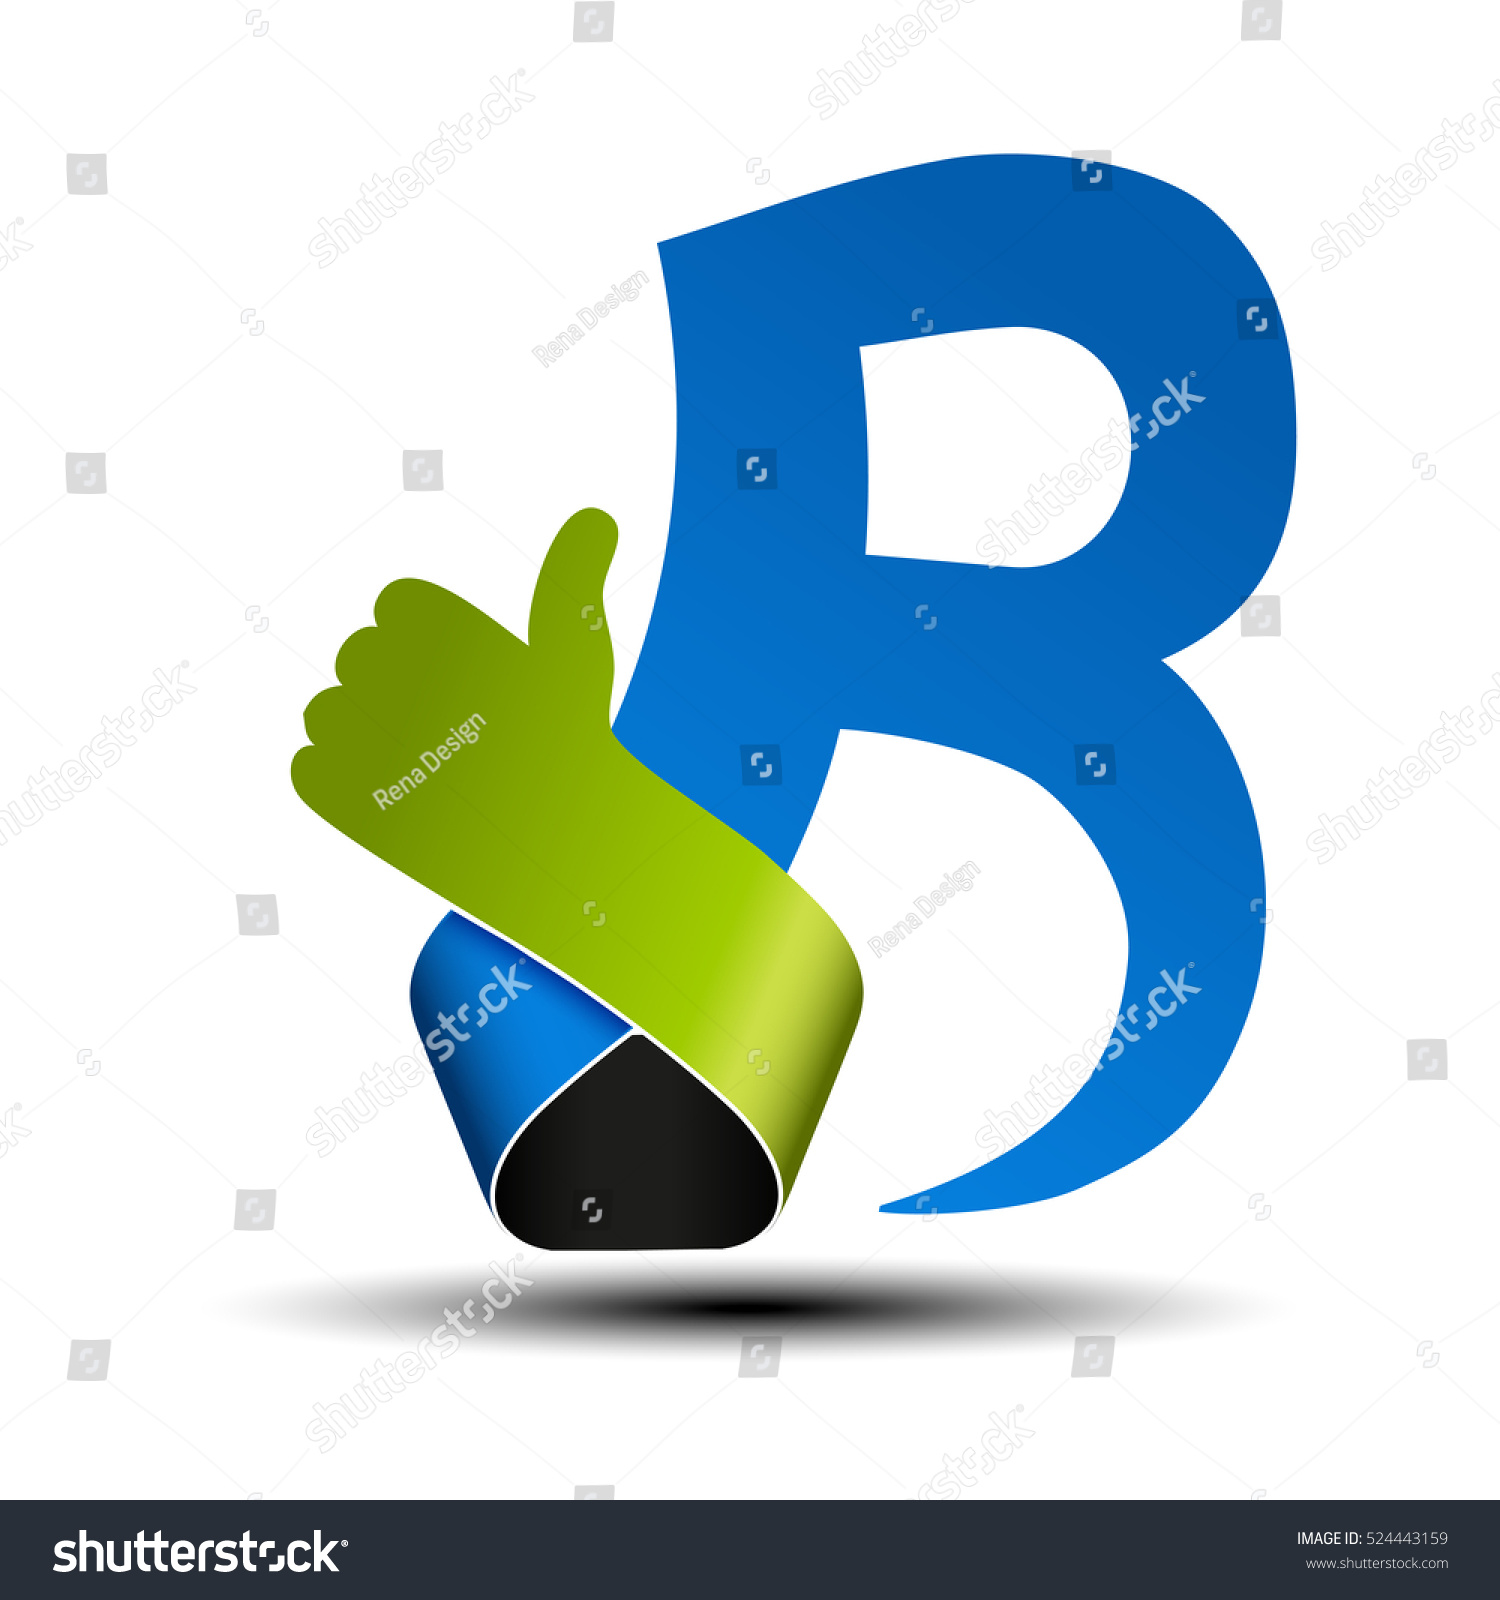 Image result for letter B is best